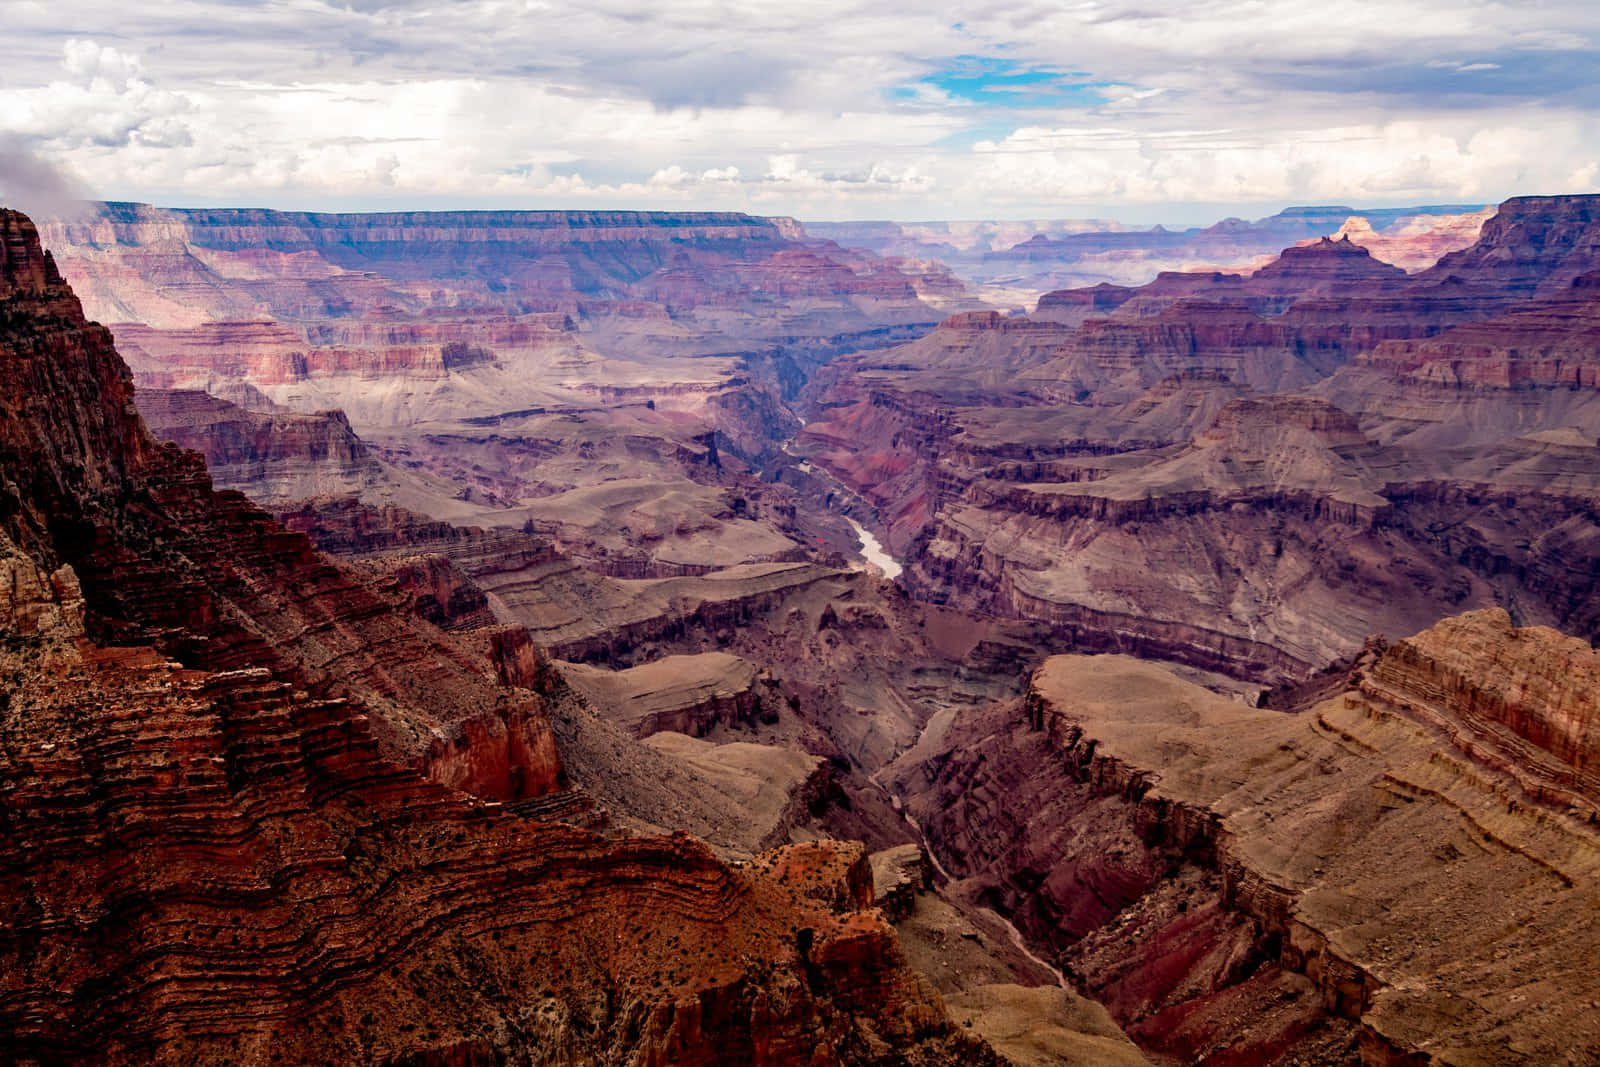 An awe-inspiring view of the Grand Canyon